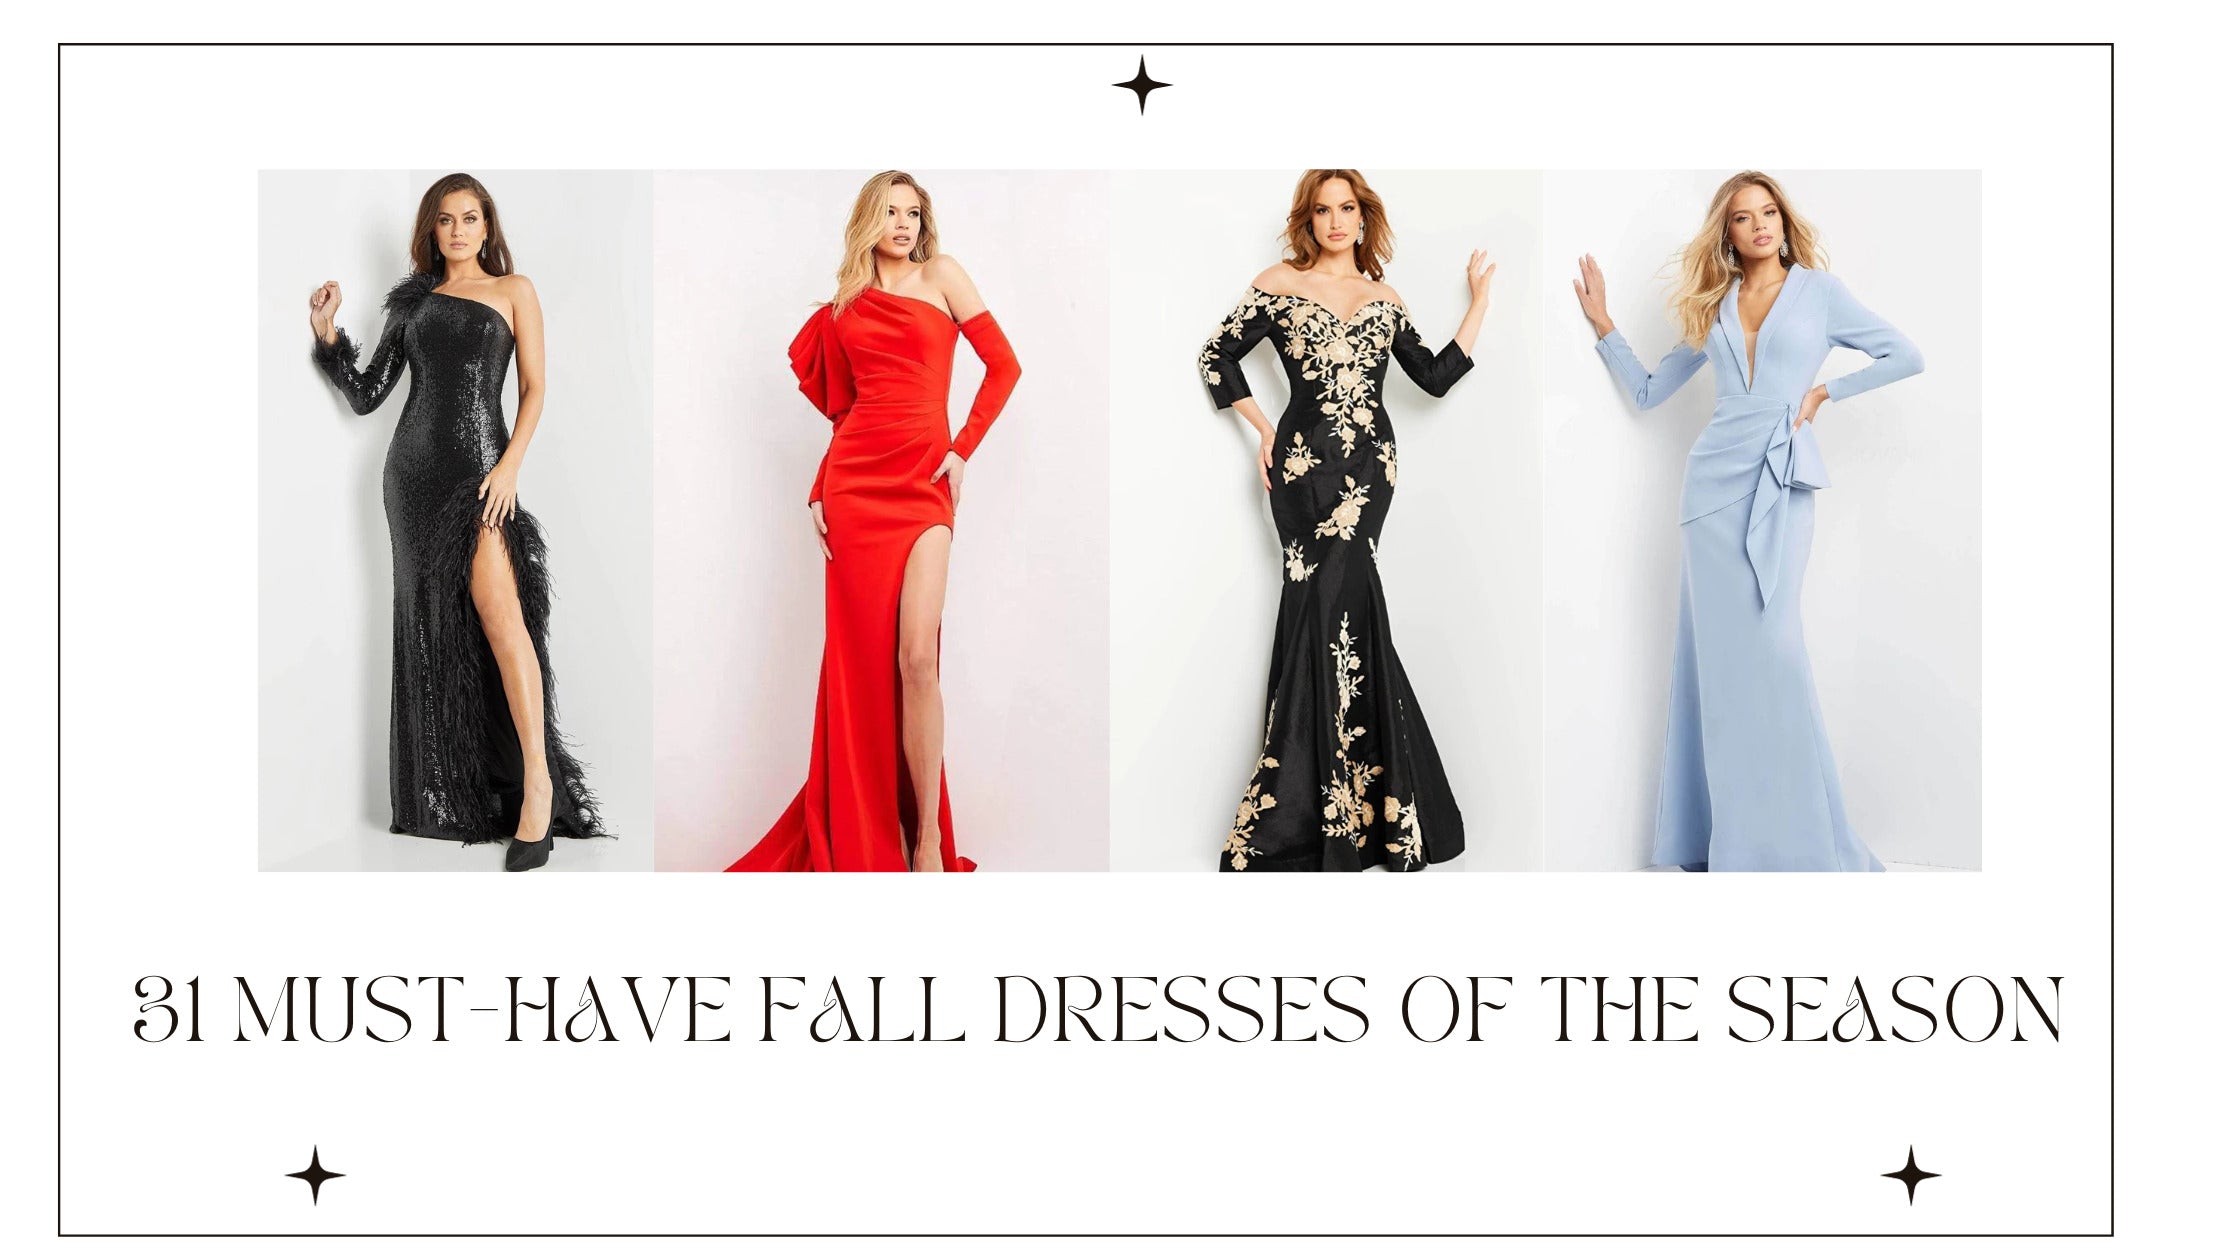 Fall dresses of the season